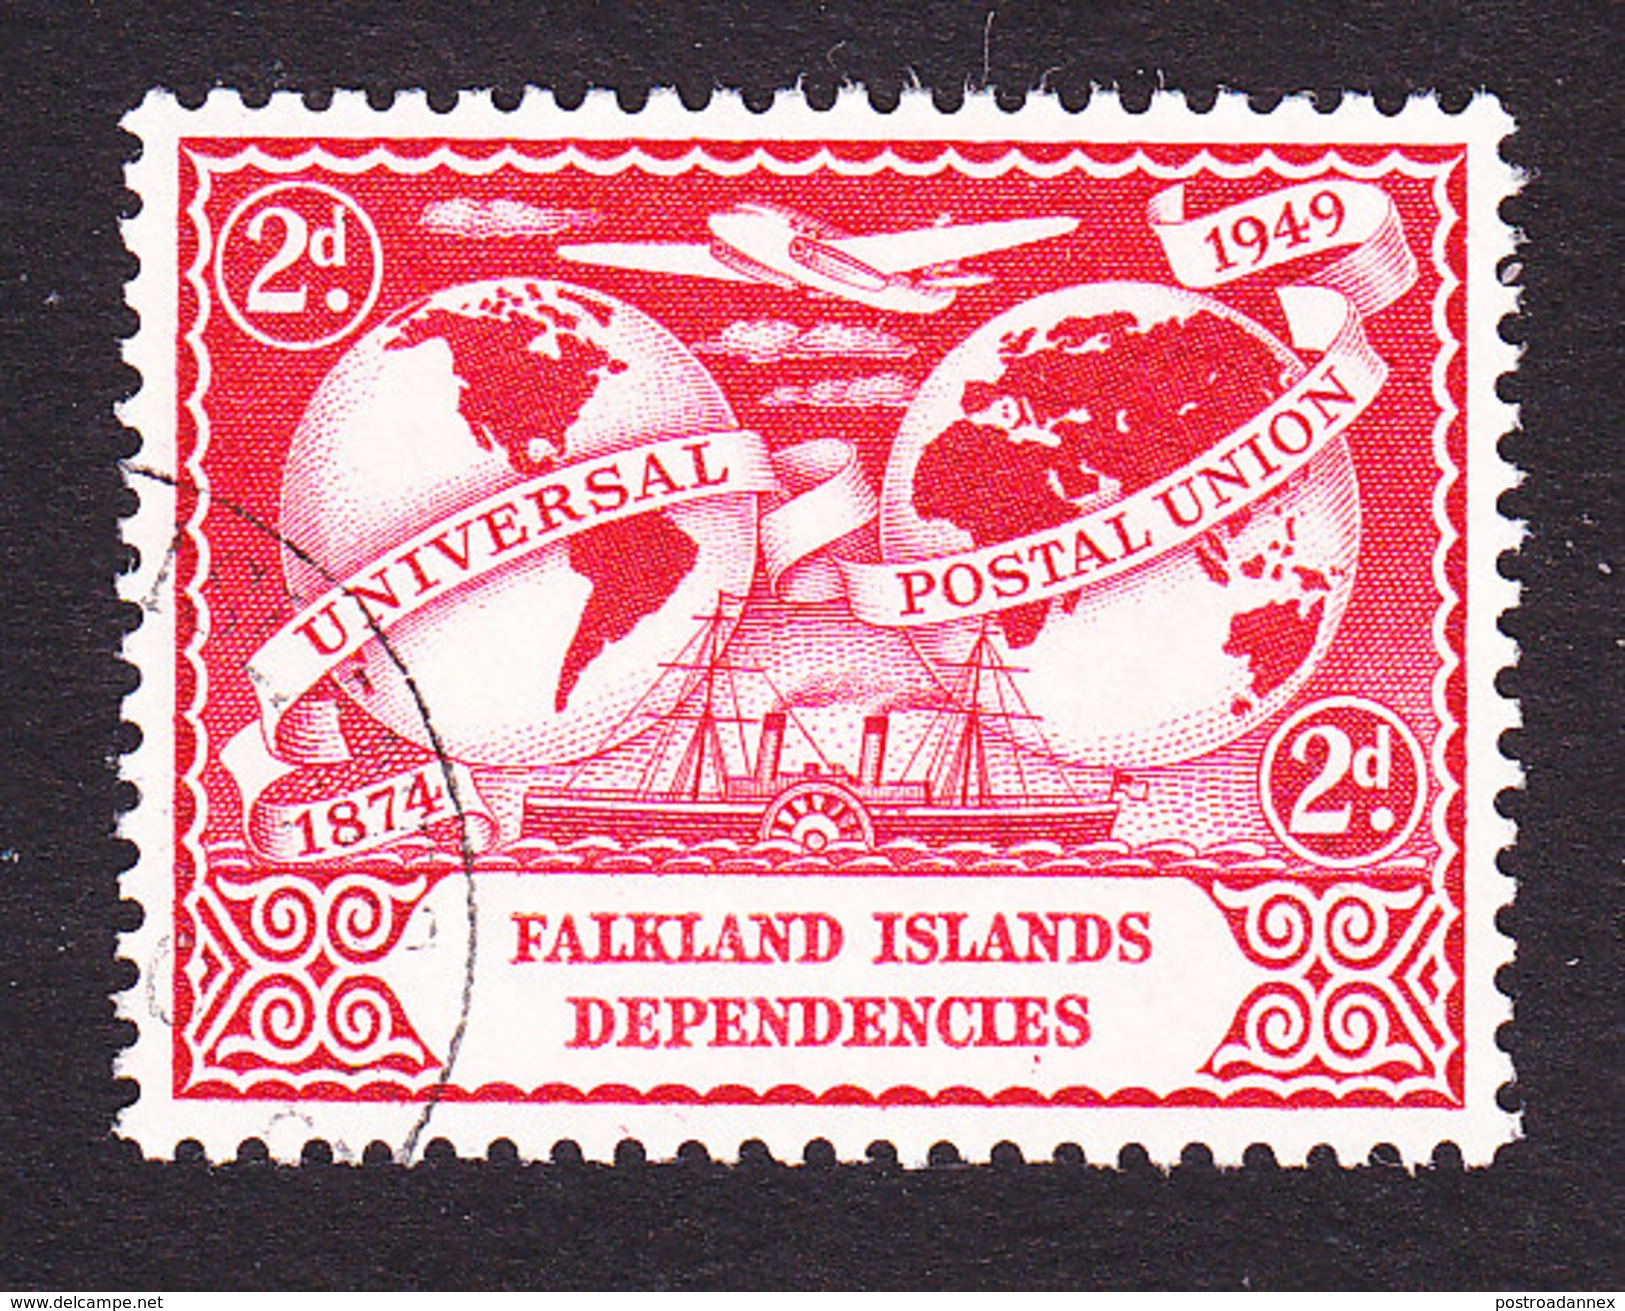 Falkland Islands Dependencies, Scott #1L15, Used, UPU, Issued 1949 - Falkland